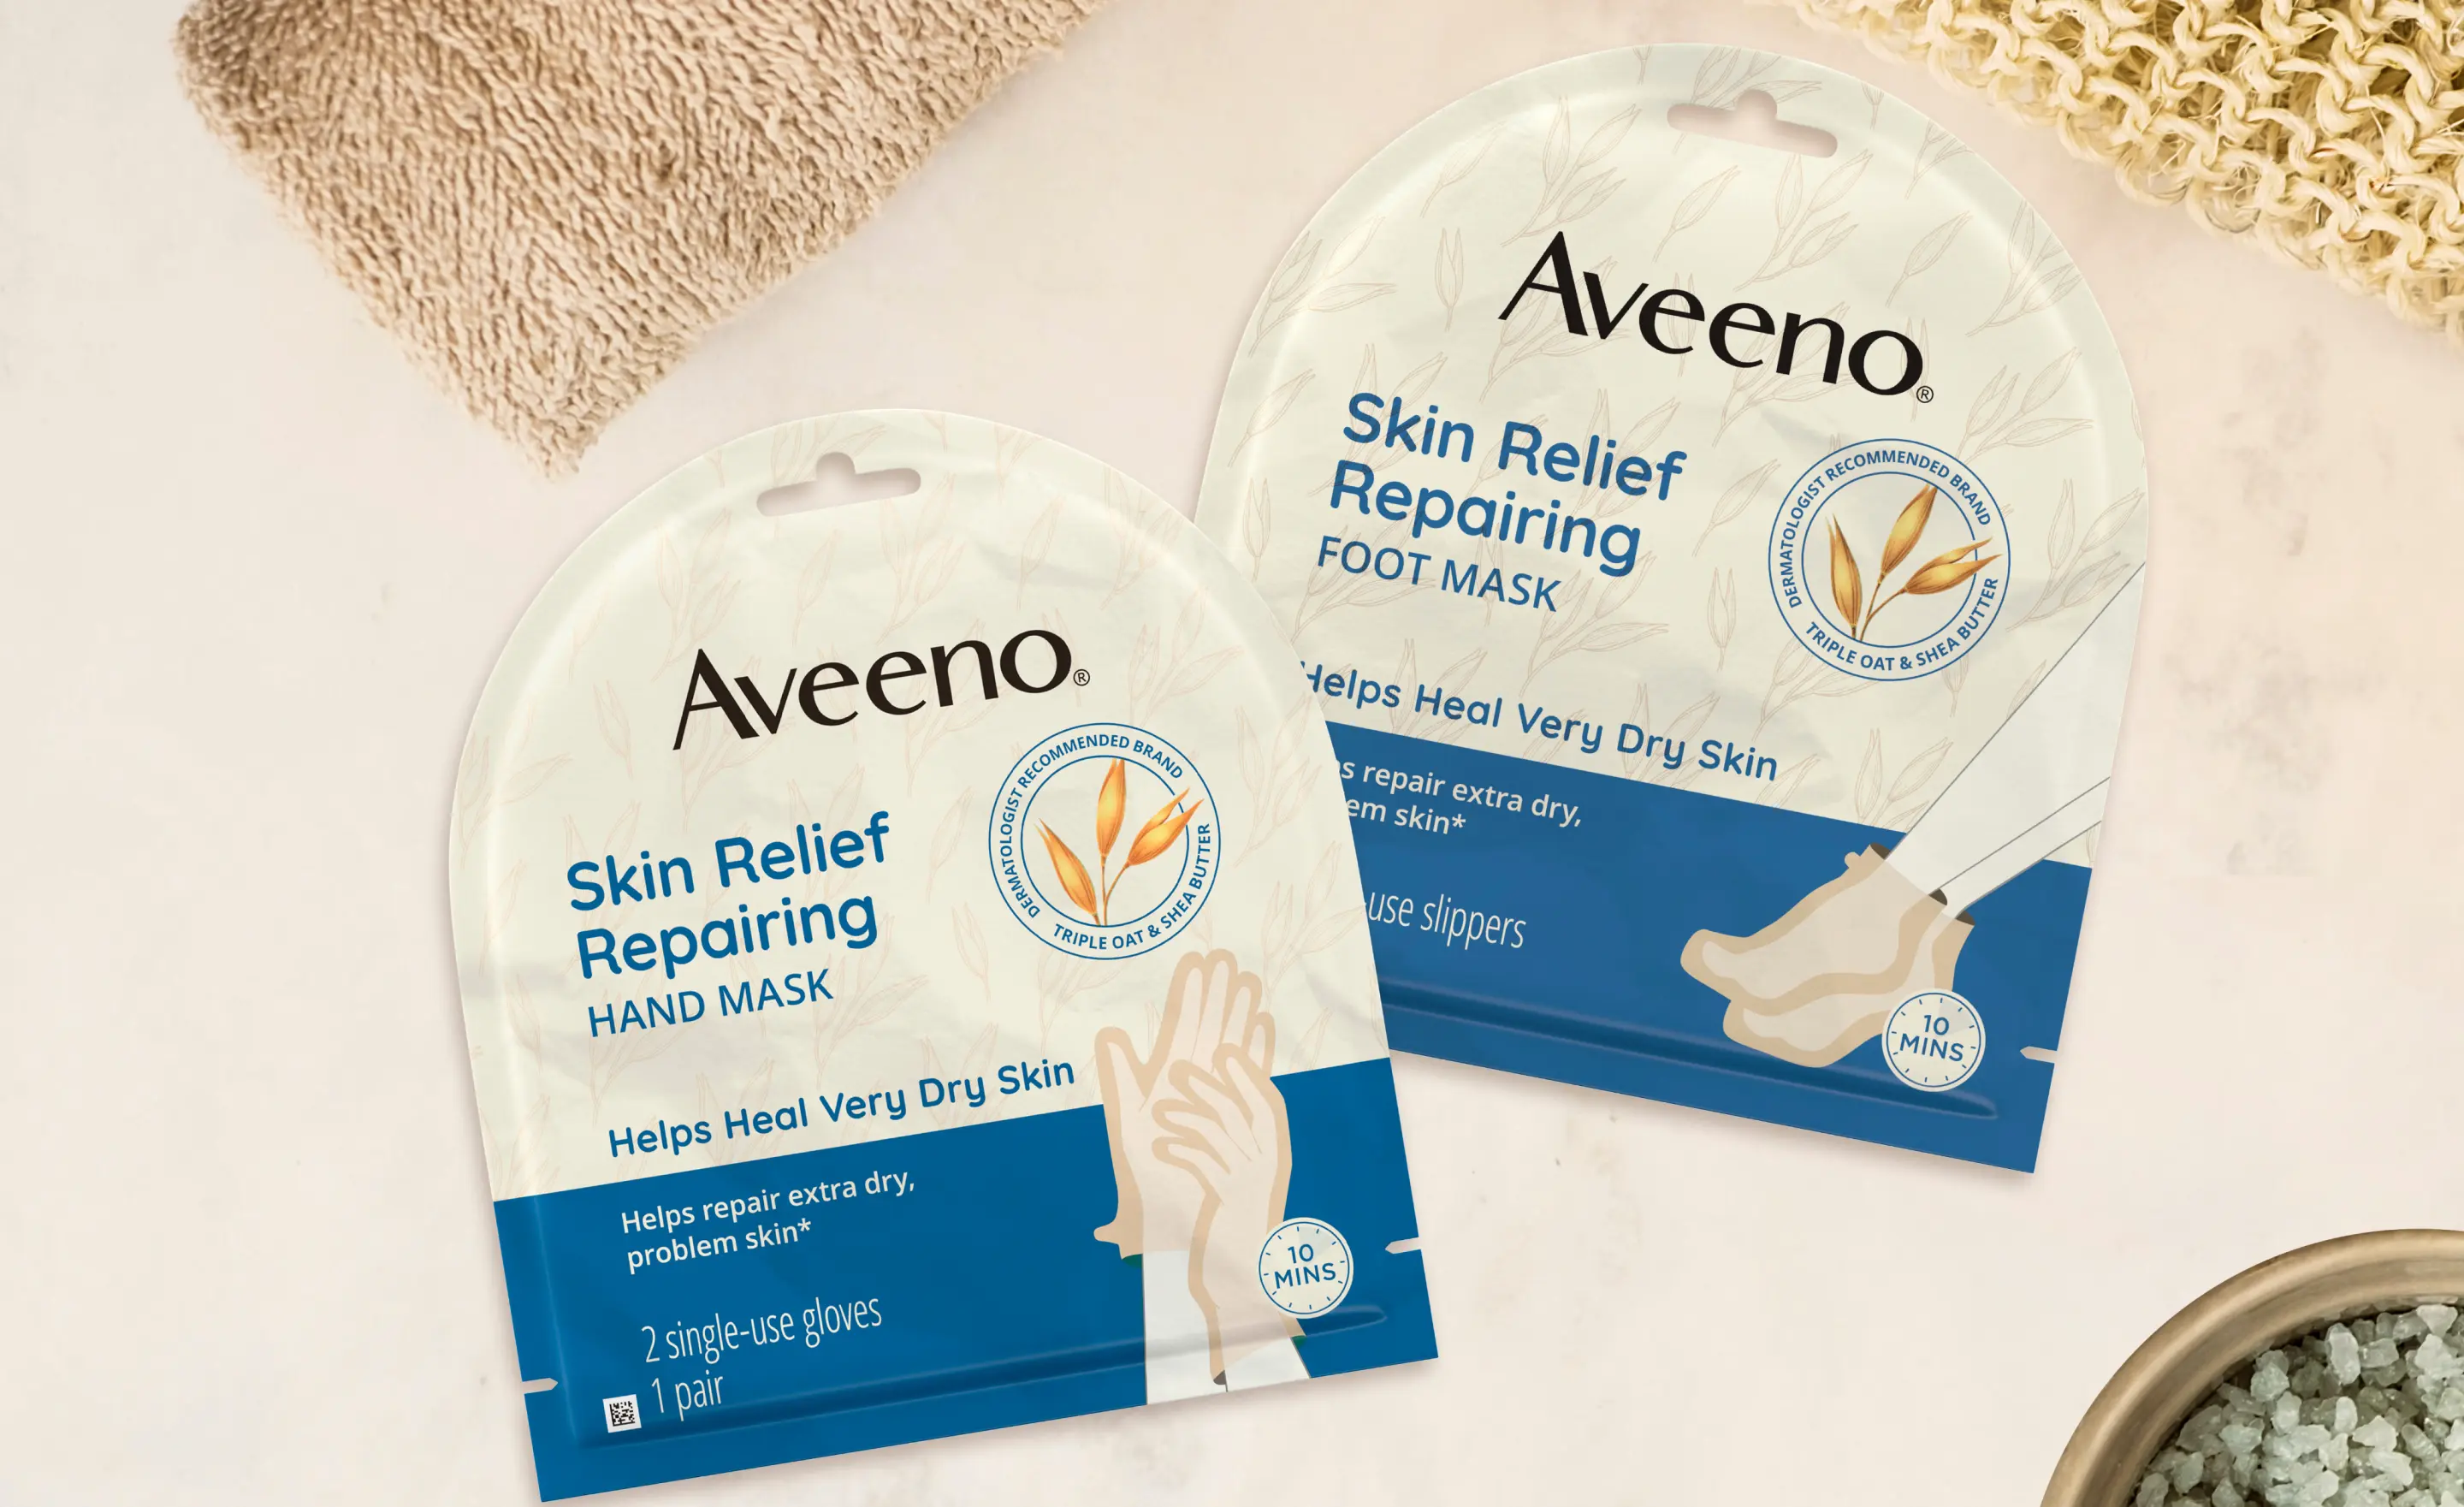 Aveeno Skin Relief Repairing Masks to Relieve Stress